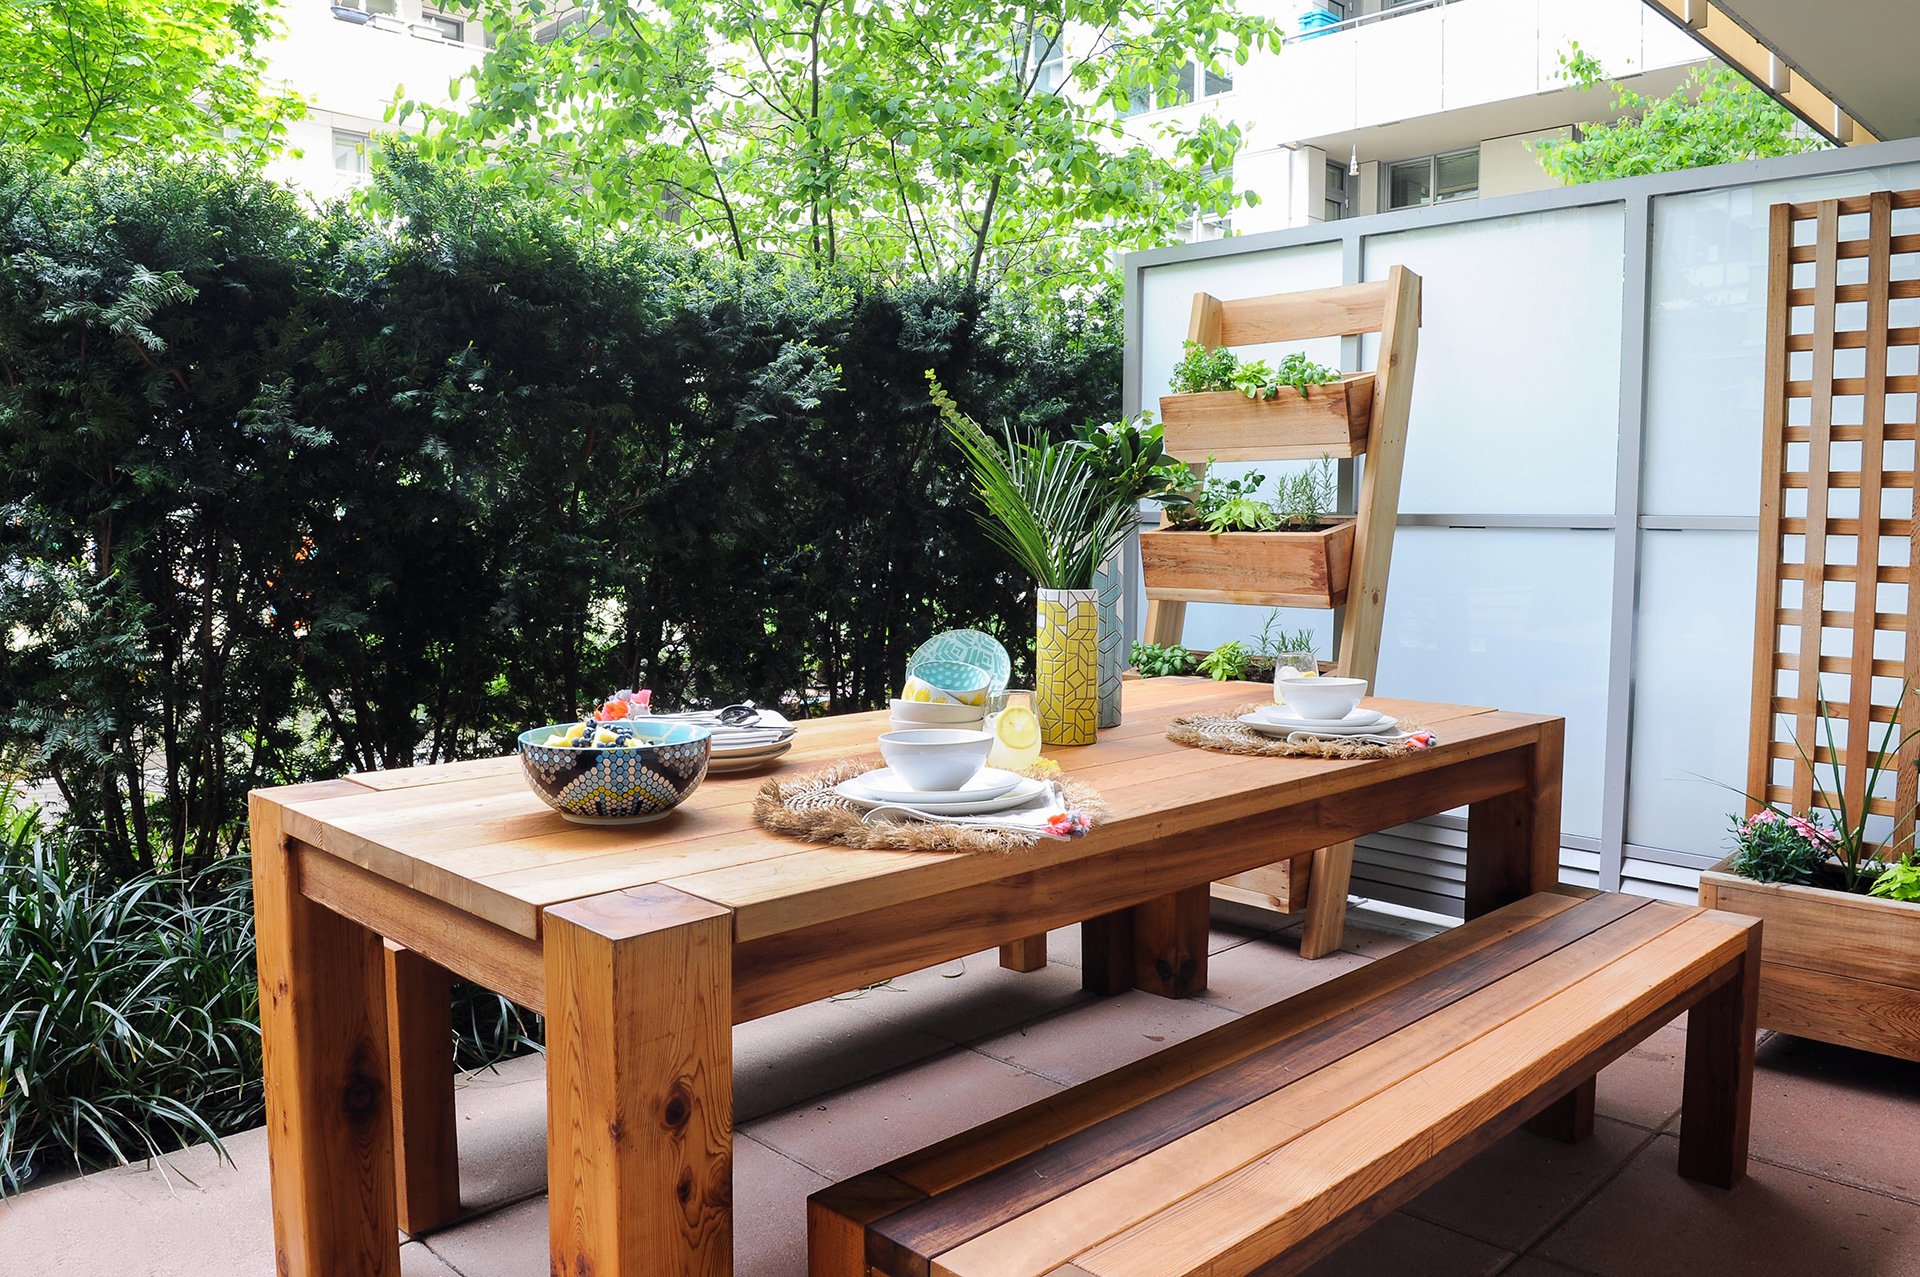 diy modern table project made of cedar